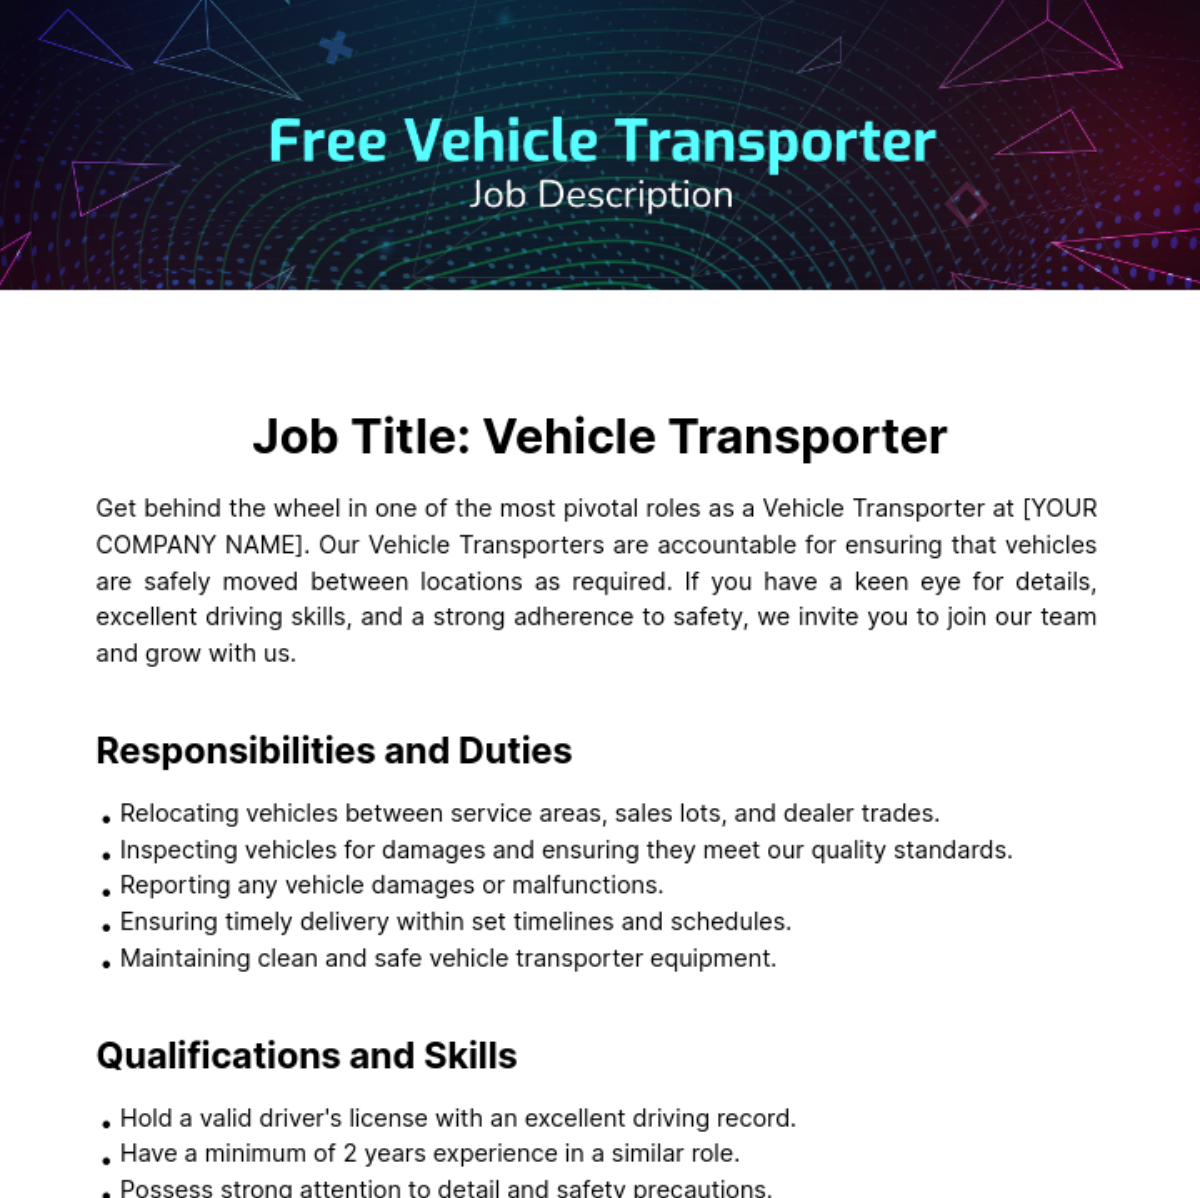 Free Vehicle Transporter Job Description Template